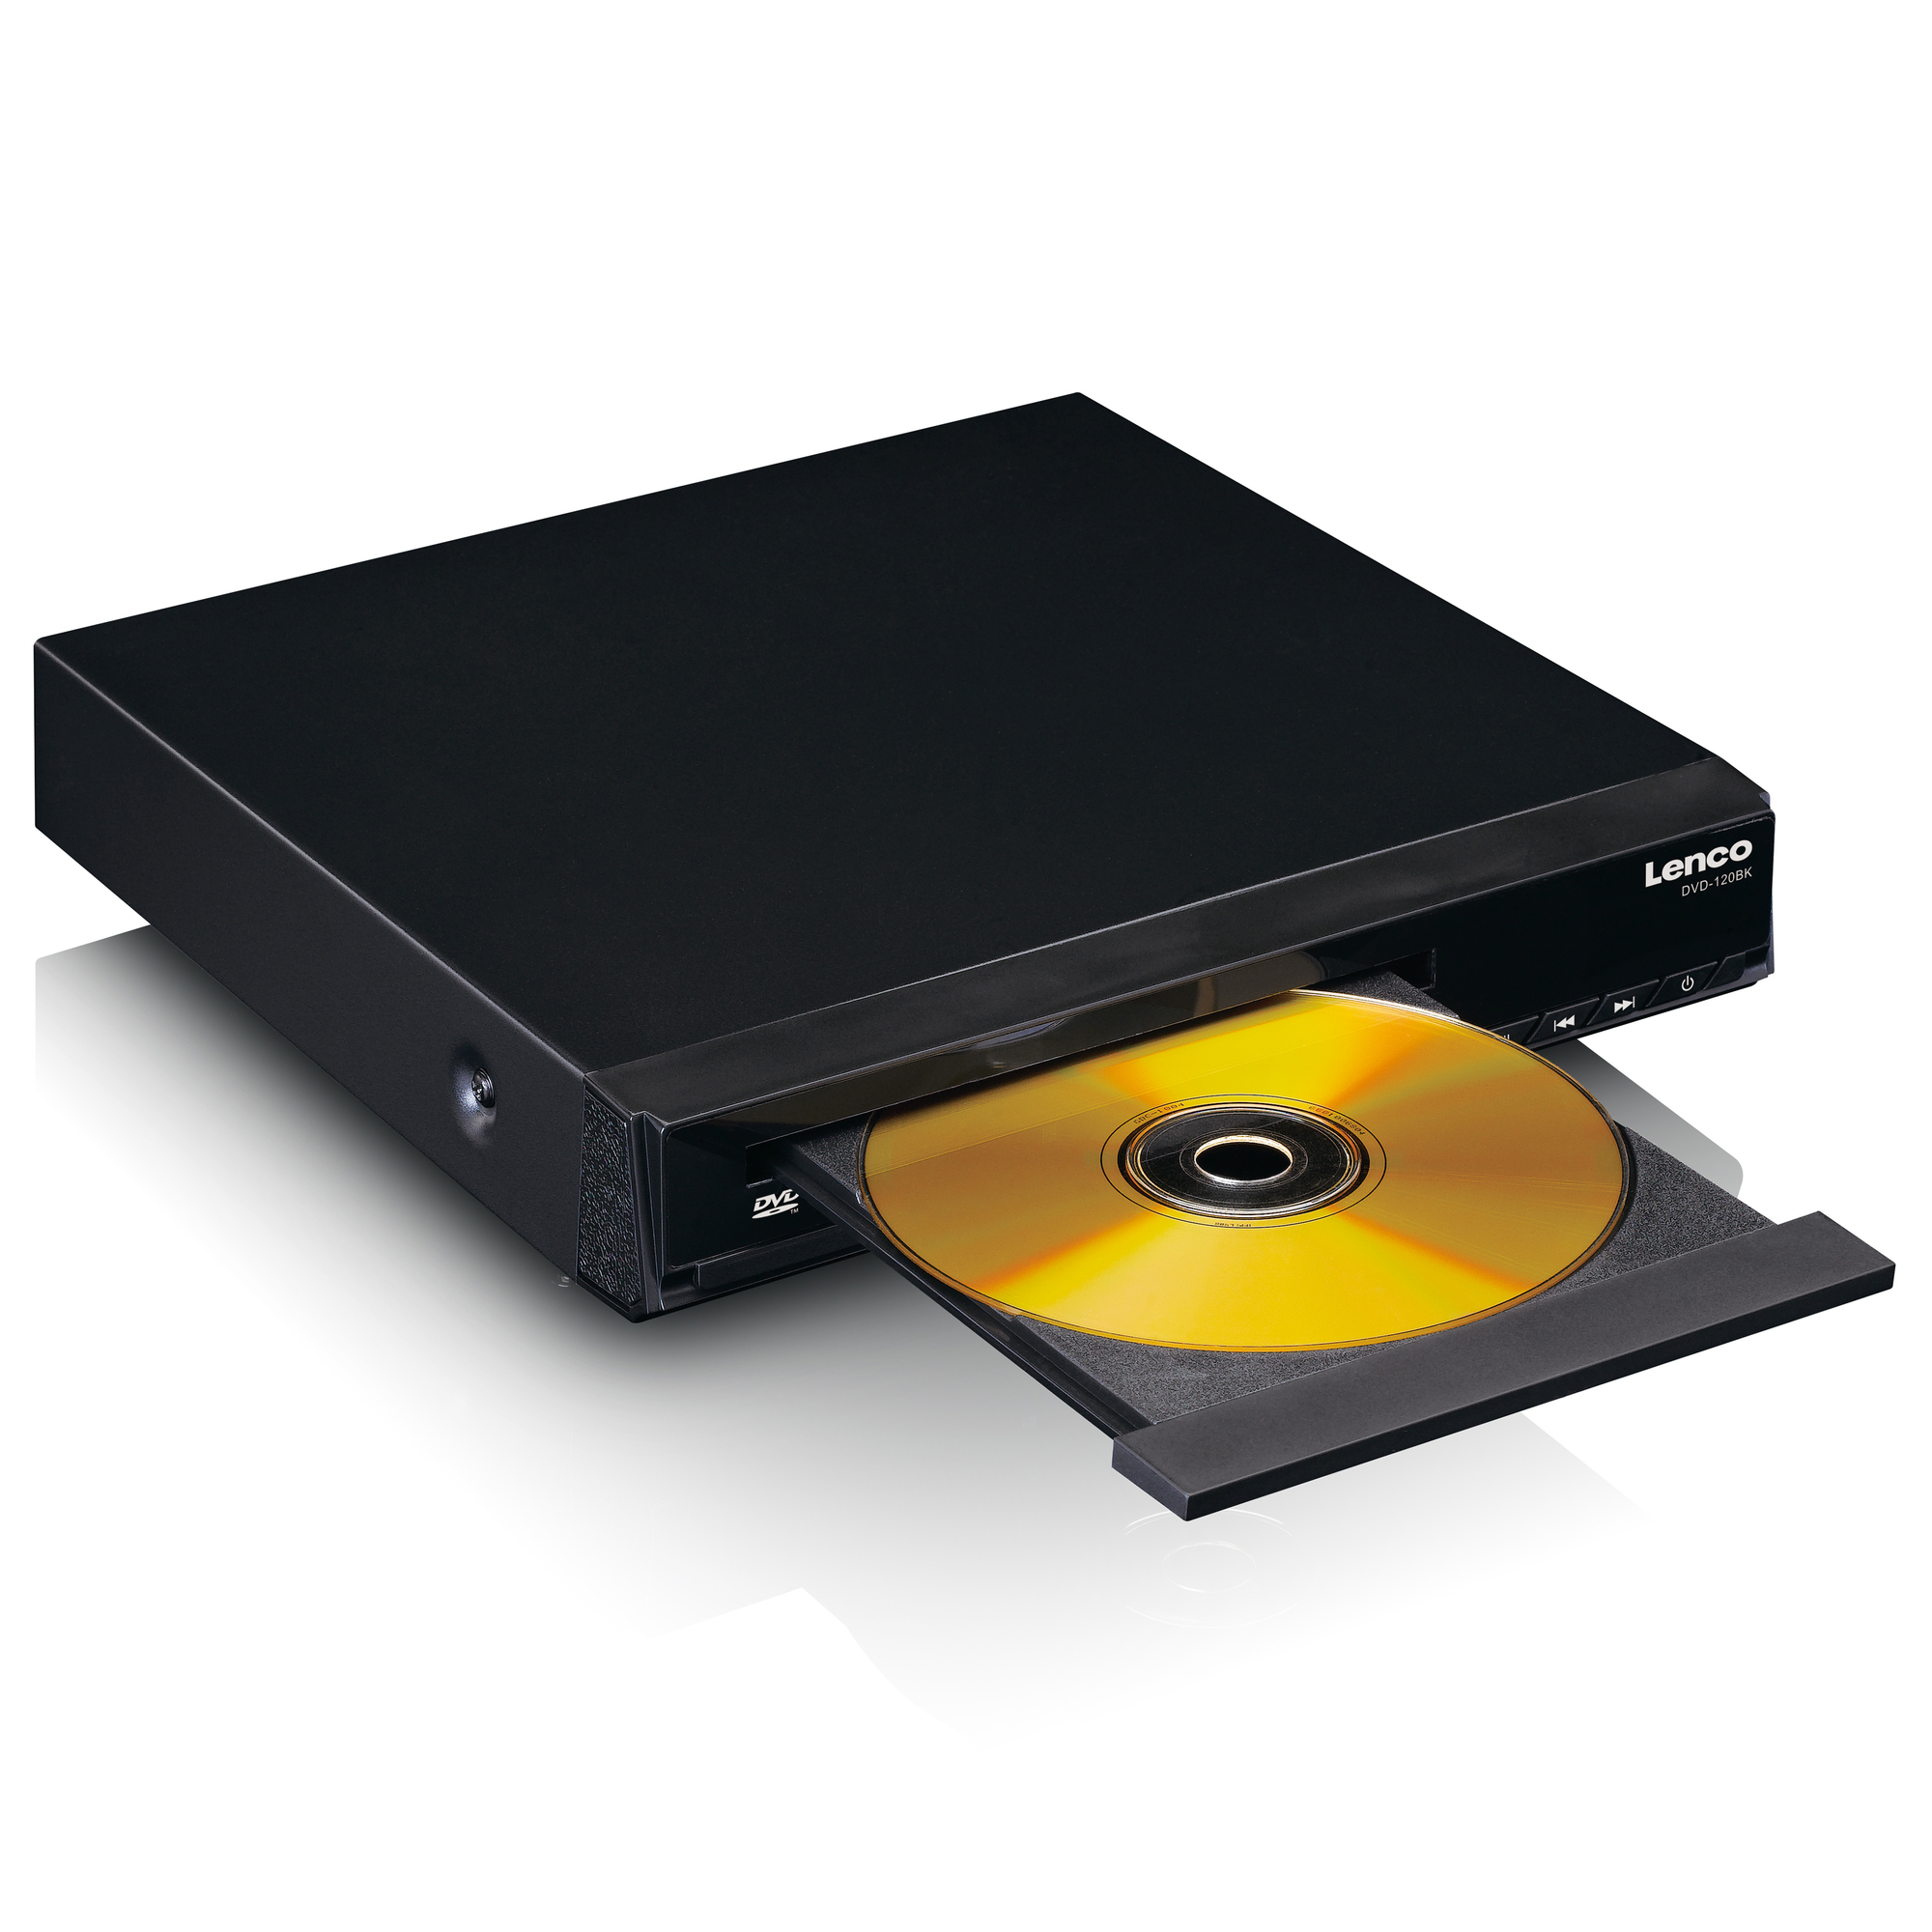 DVD-Player Schwarz DVD-120BK LENCO